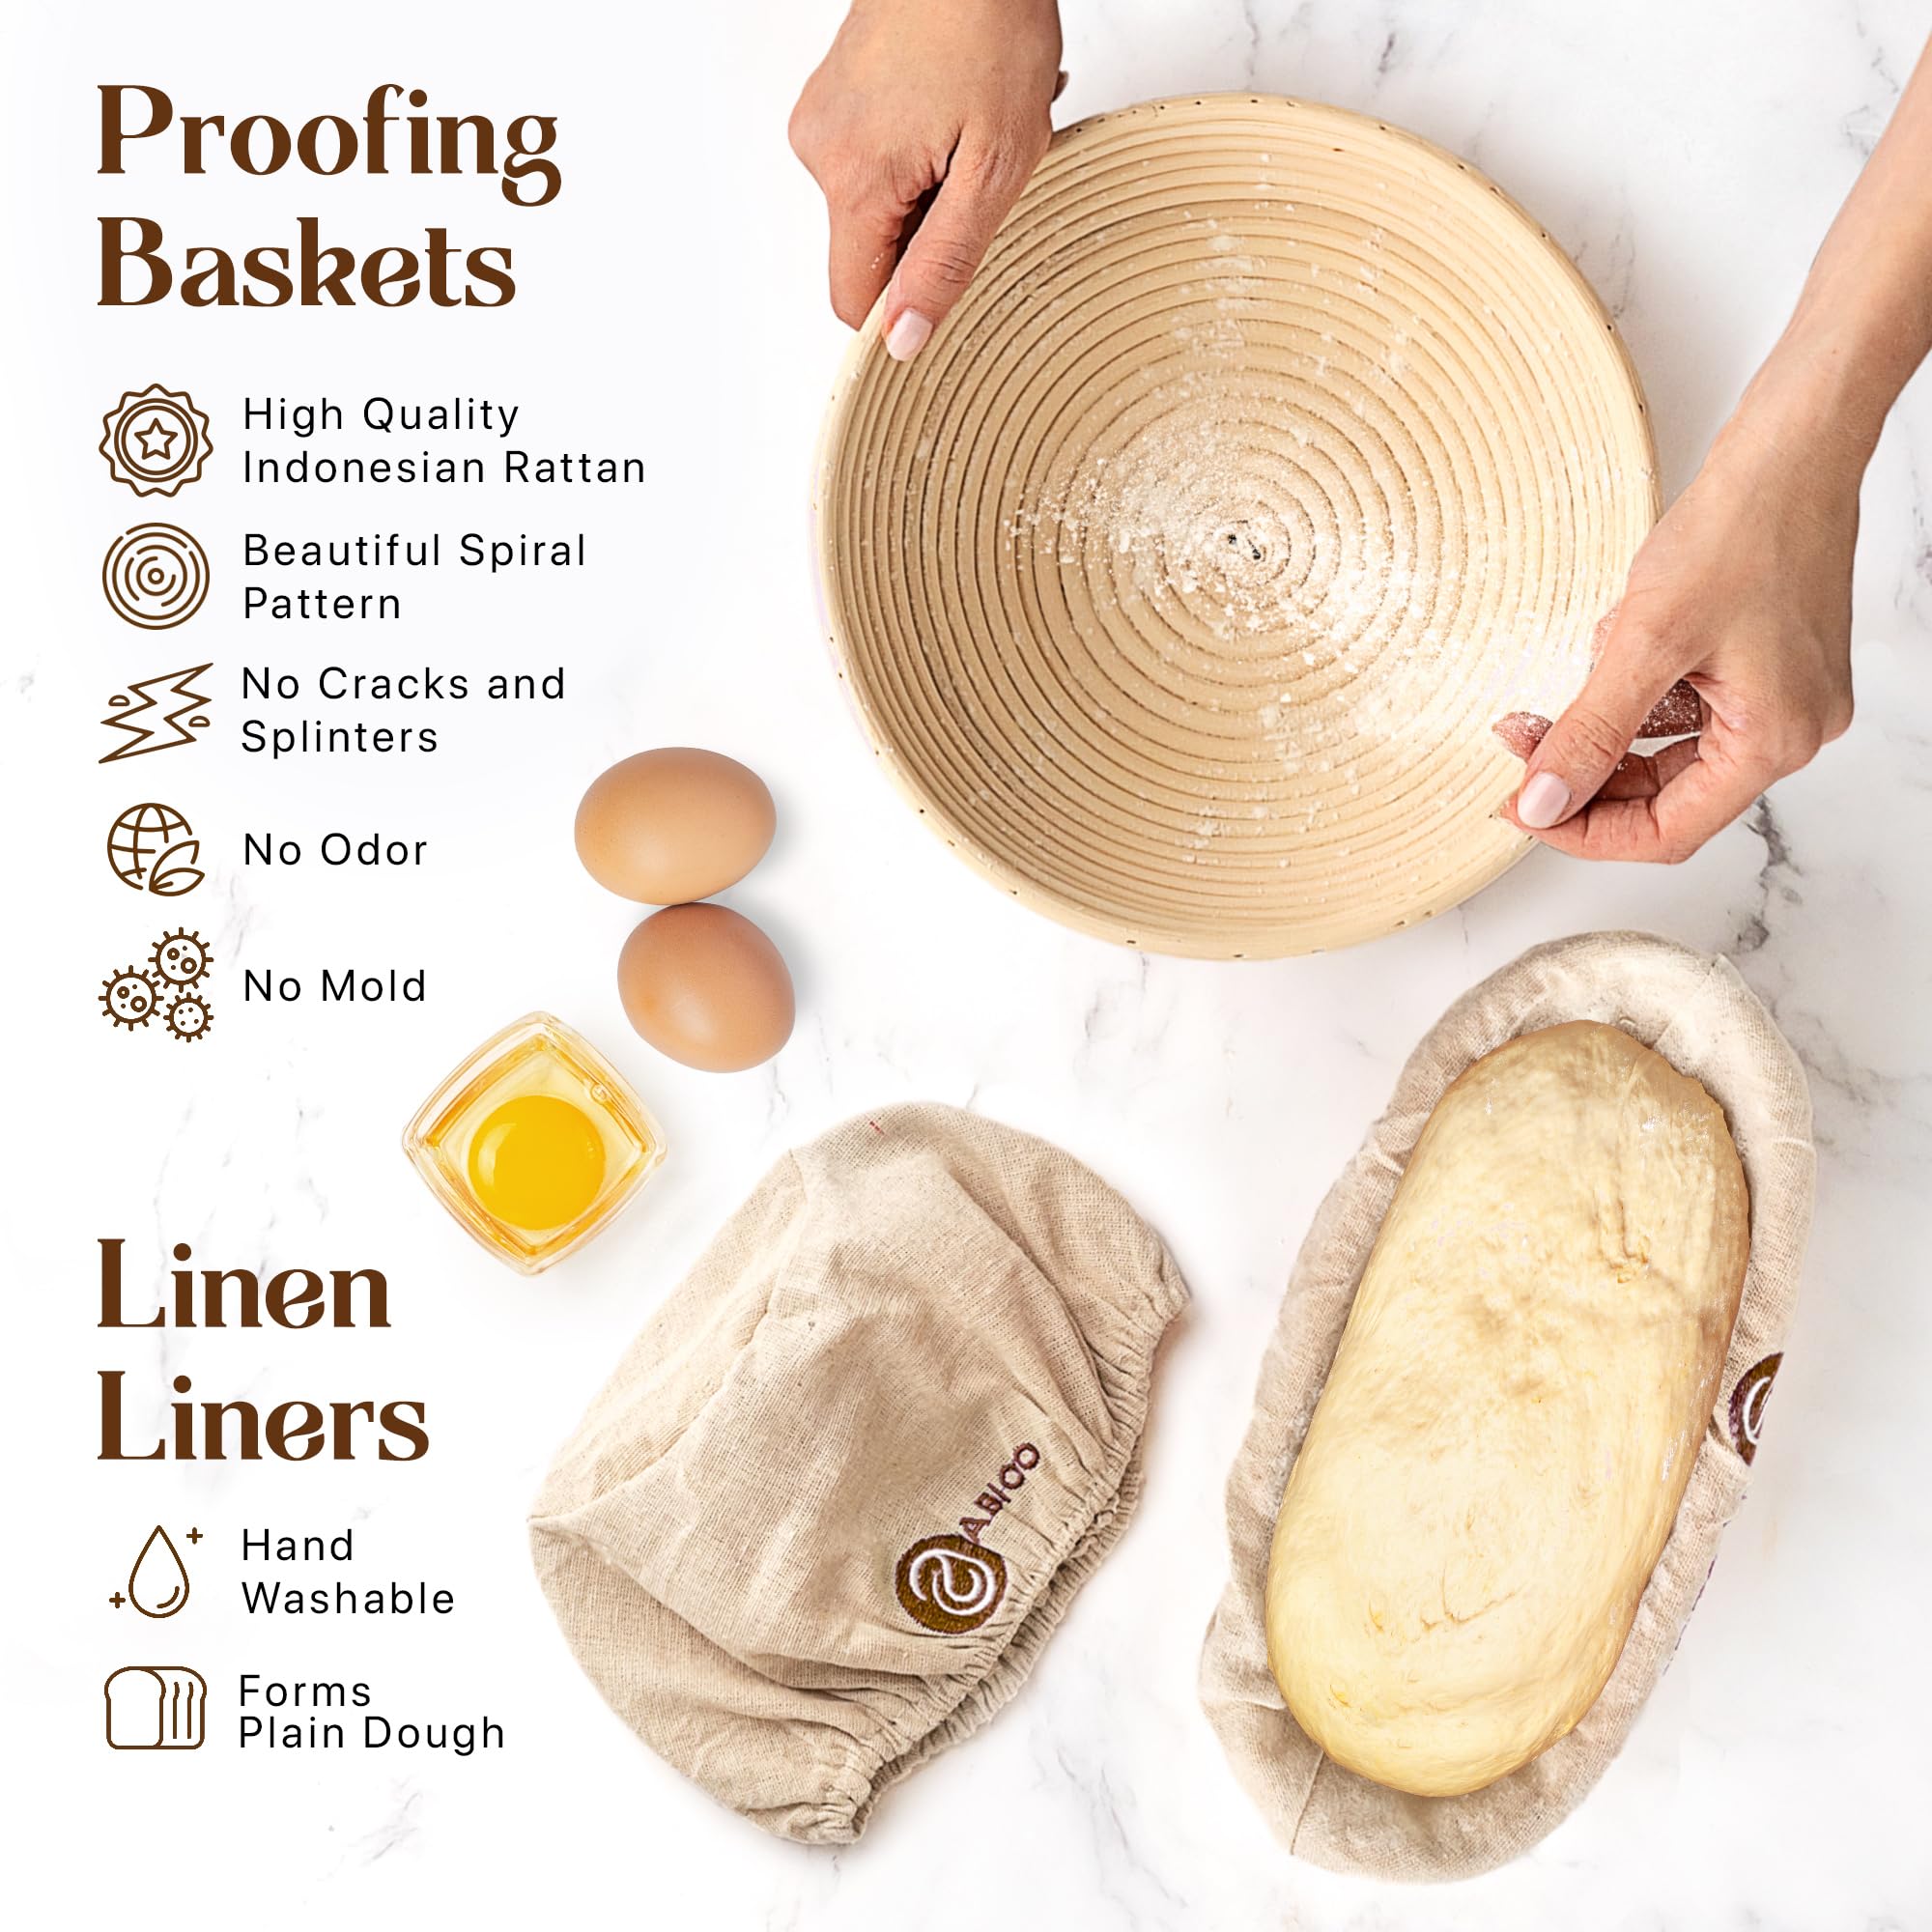 Sourdough Bread Baking Supplies - Bread Making Kit Includes 10